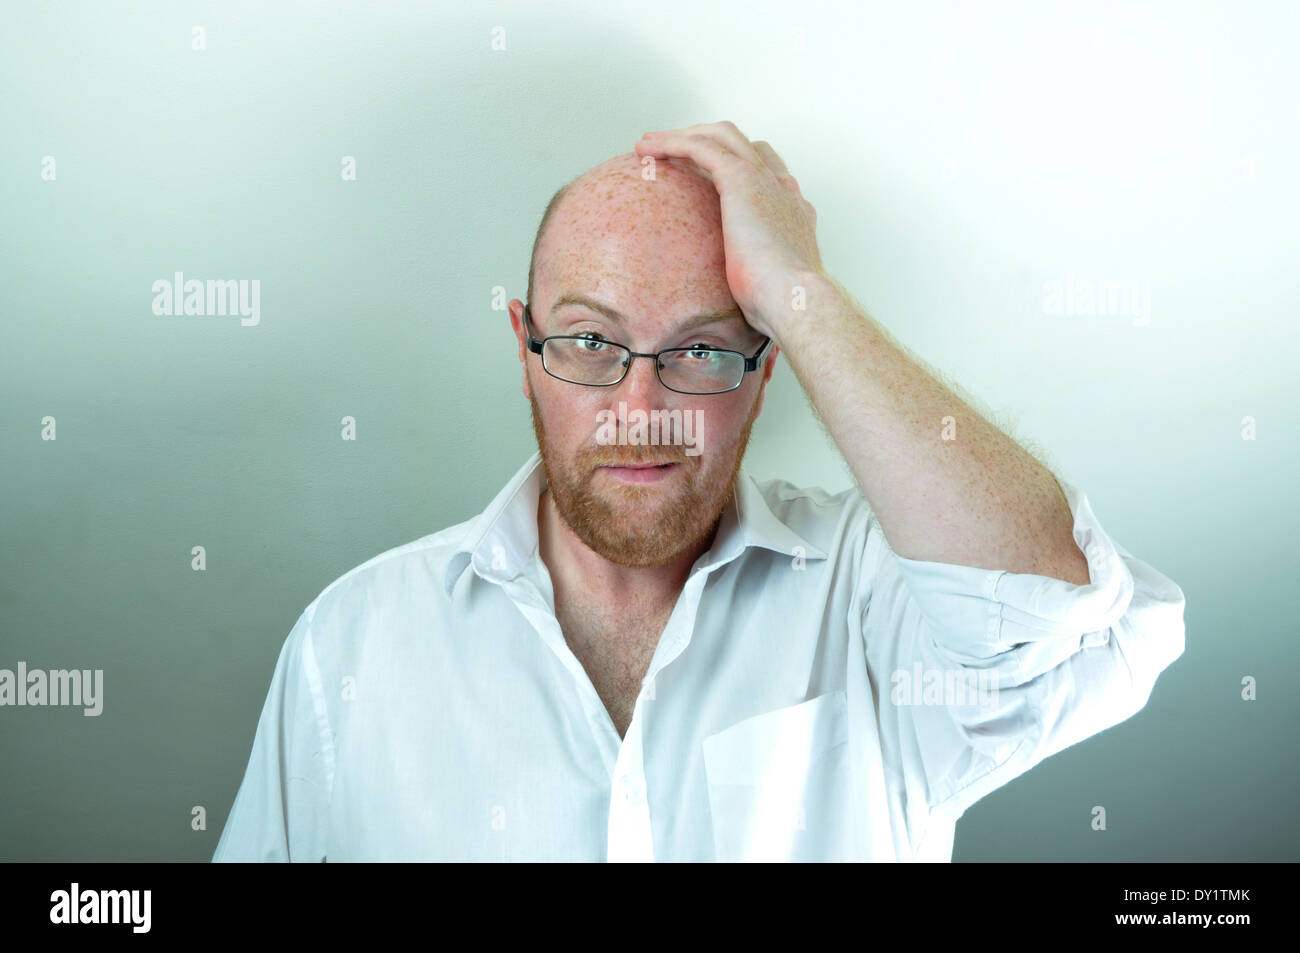 Bald man rubbing his head Stock Photo